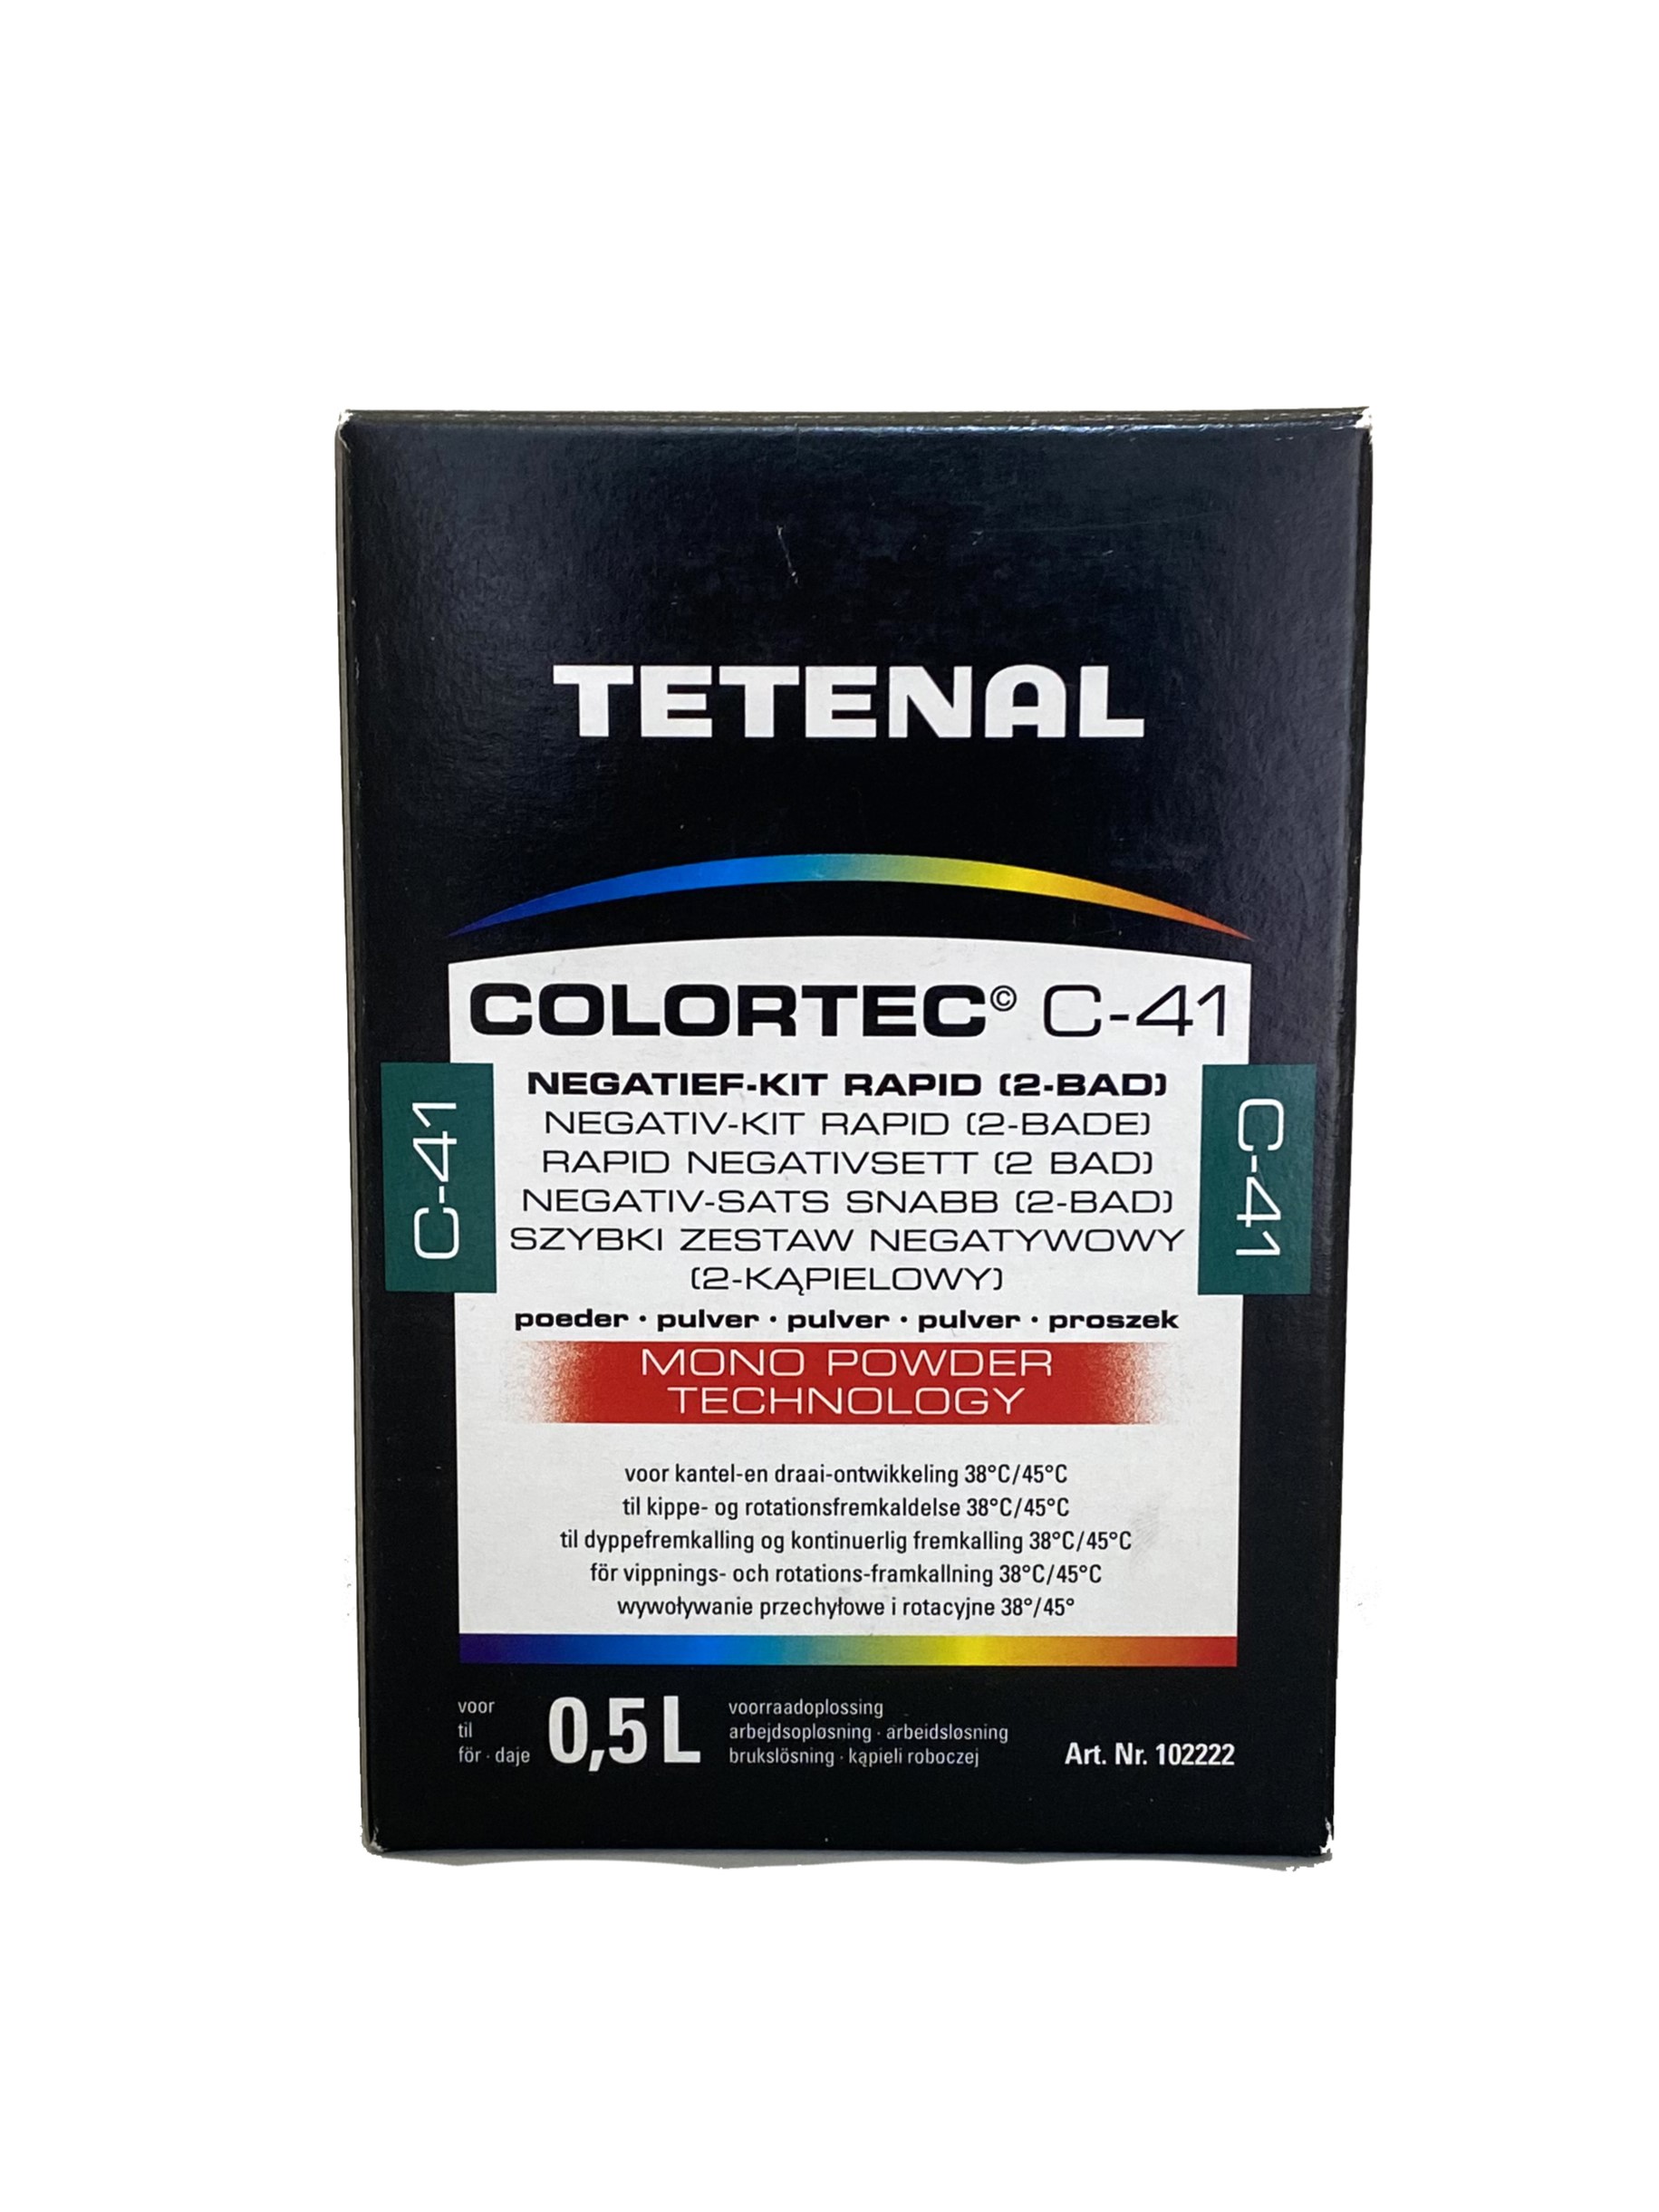 tetenal-colortec-c41-negativ-kit-rapid-fotokotti